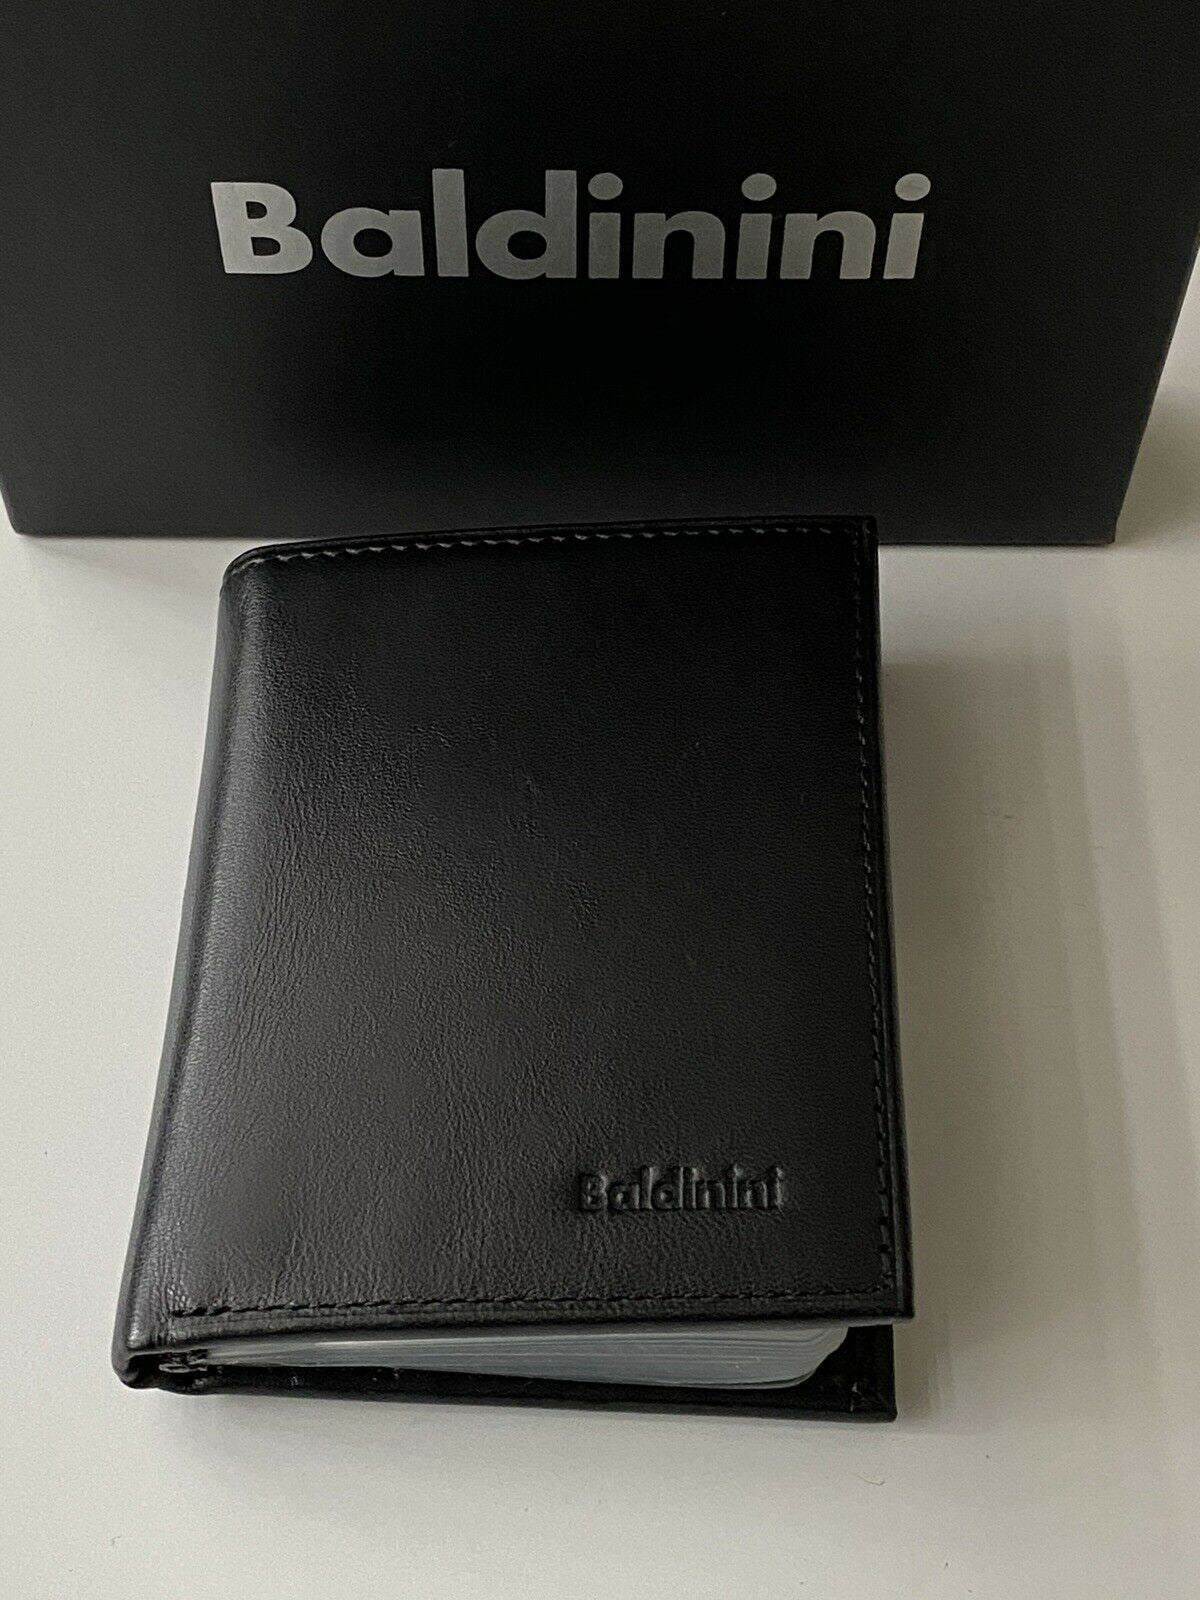 NIB Baldinini Mens Card Holder Wallet Leather Black P57VITE00 Italy